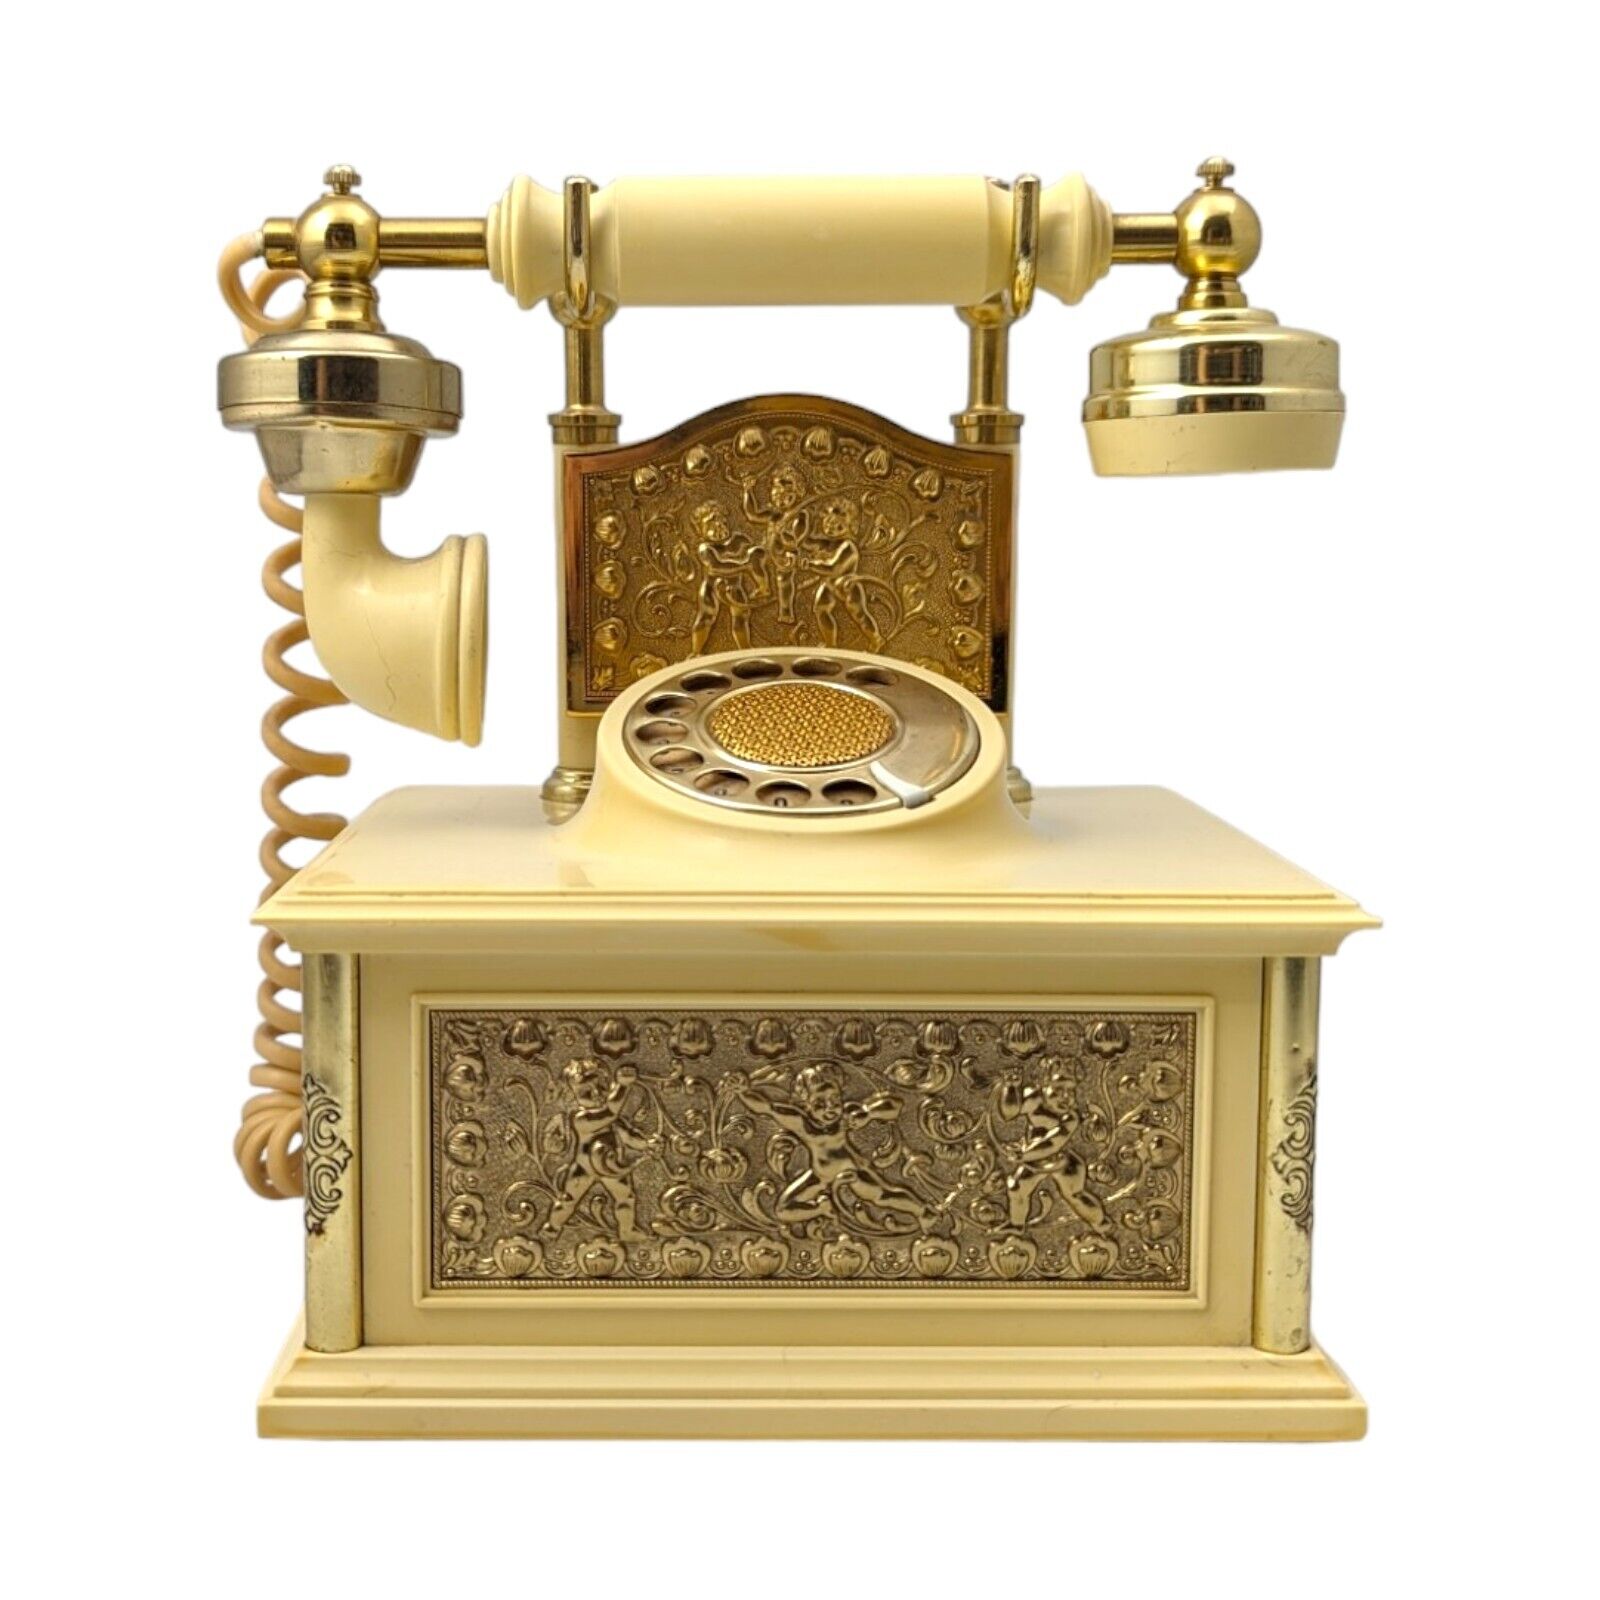 Vintage Novelty French-Style Telephone Radio #1177 Please Read